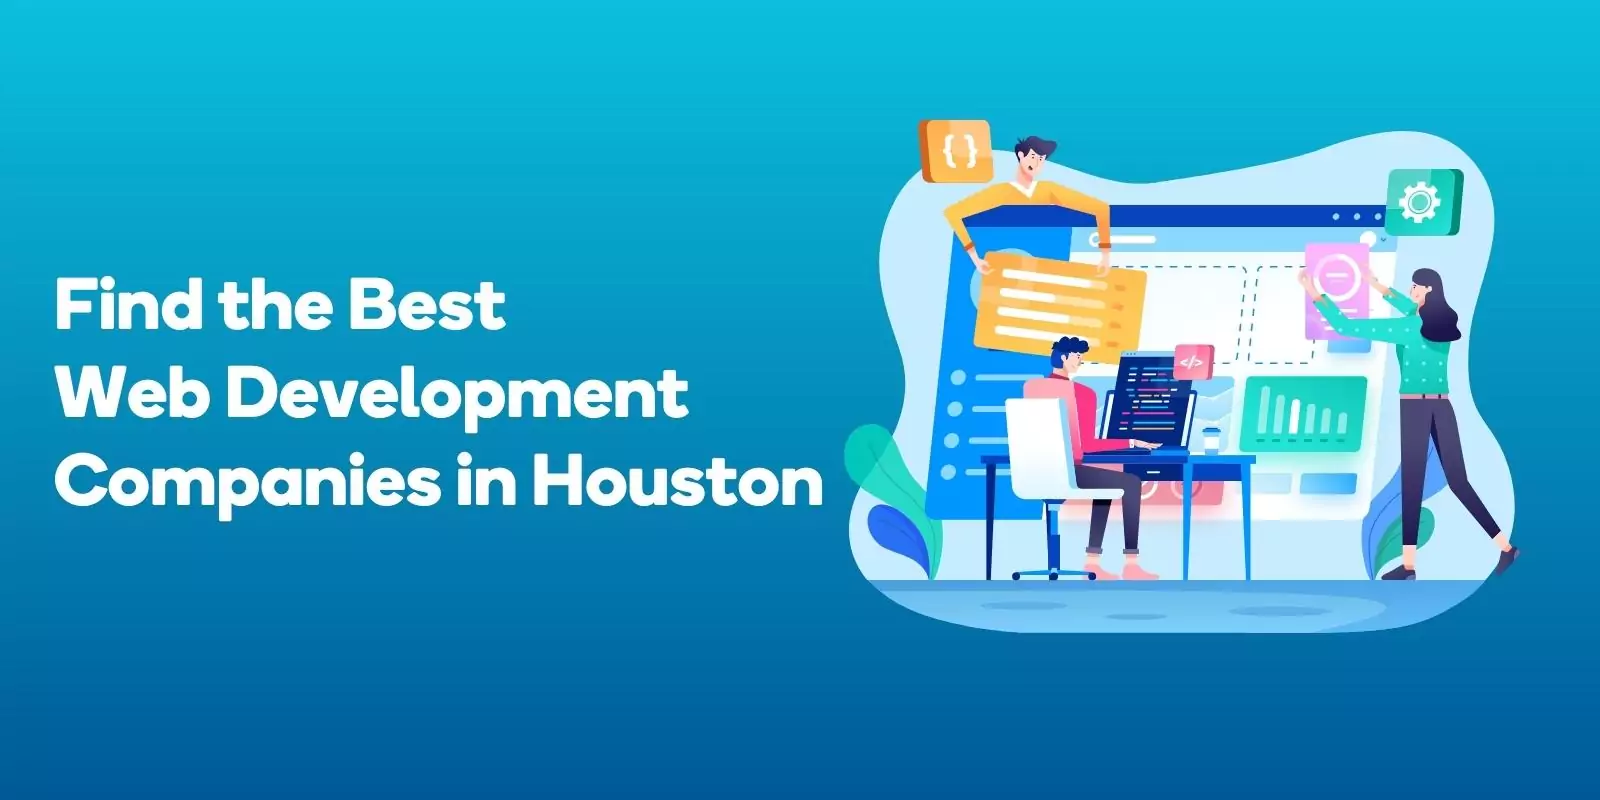 Find the Best Web Development Companies in Houston